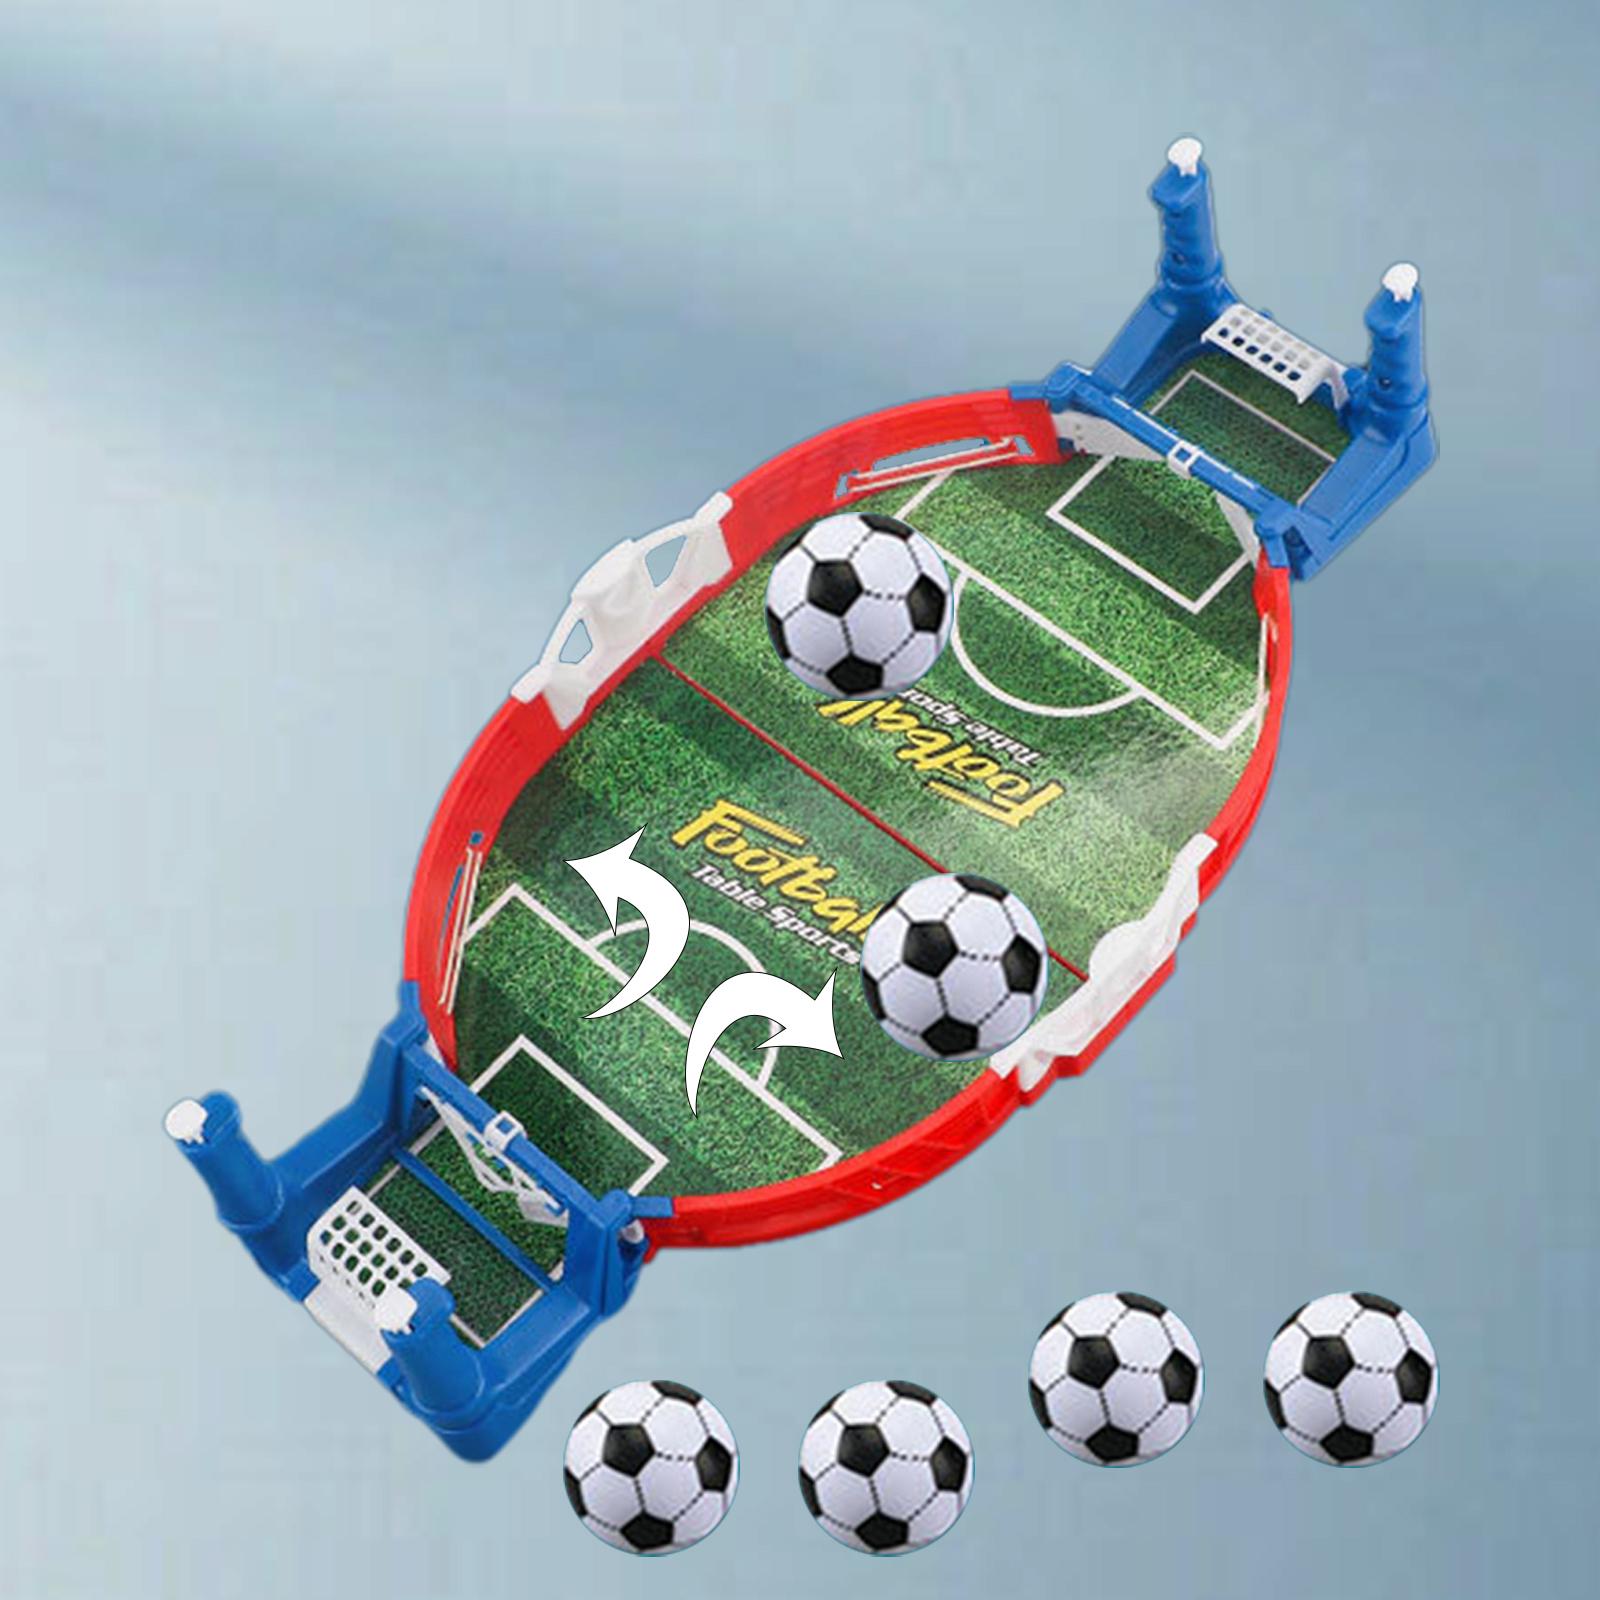 Desktop Football Board Games Kit Indoor Toy Sports for Adults Kids 38cmx18cm 6 Balls